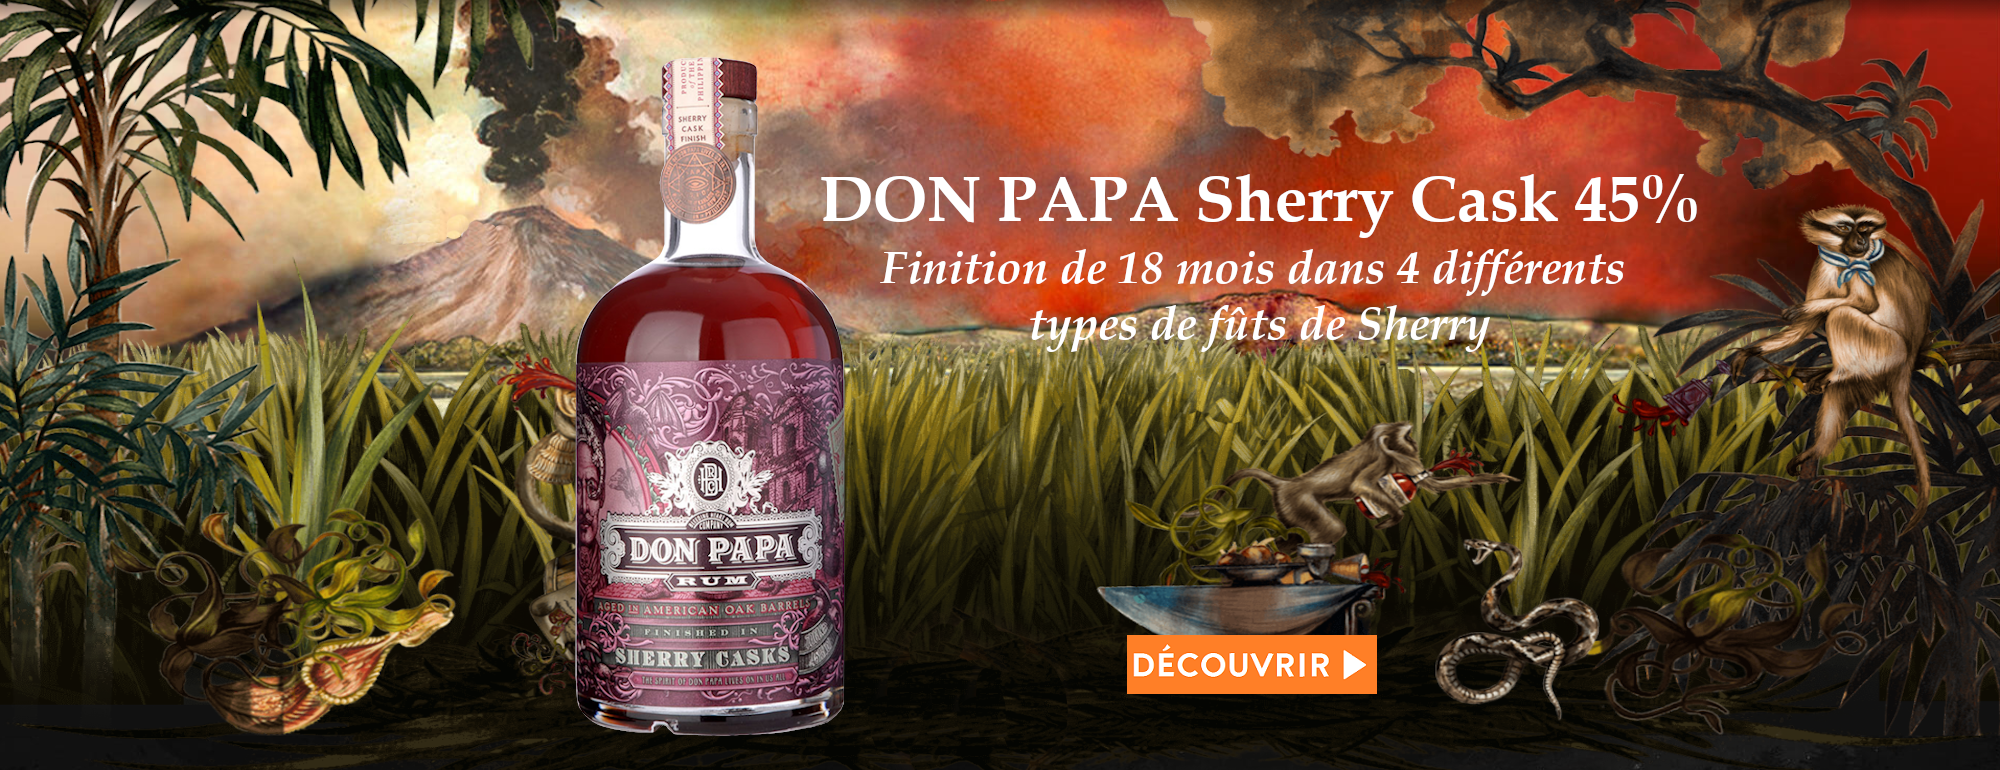 https-www-heritage-whisky-fr-rhum-rhum-espagnol-don-papa-sherry-cask-finish-rhum-de-melasse-html